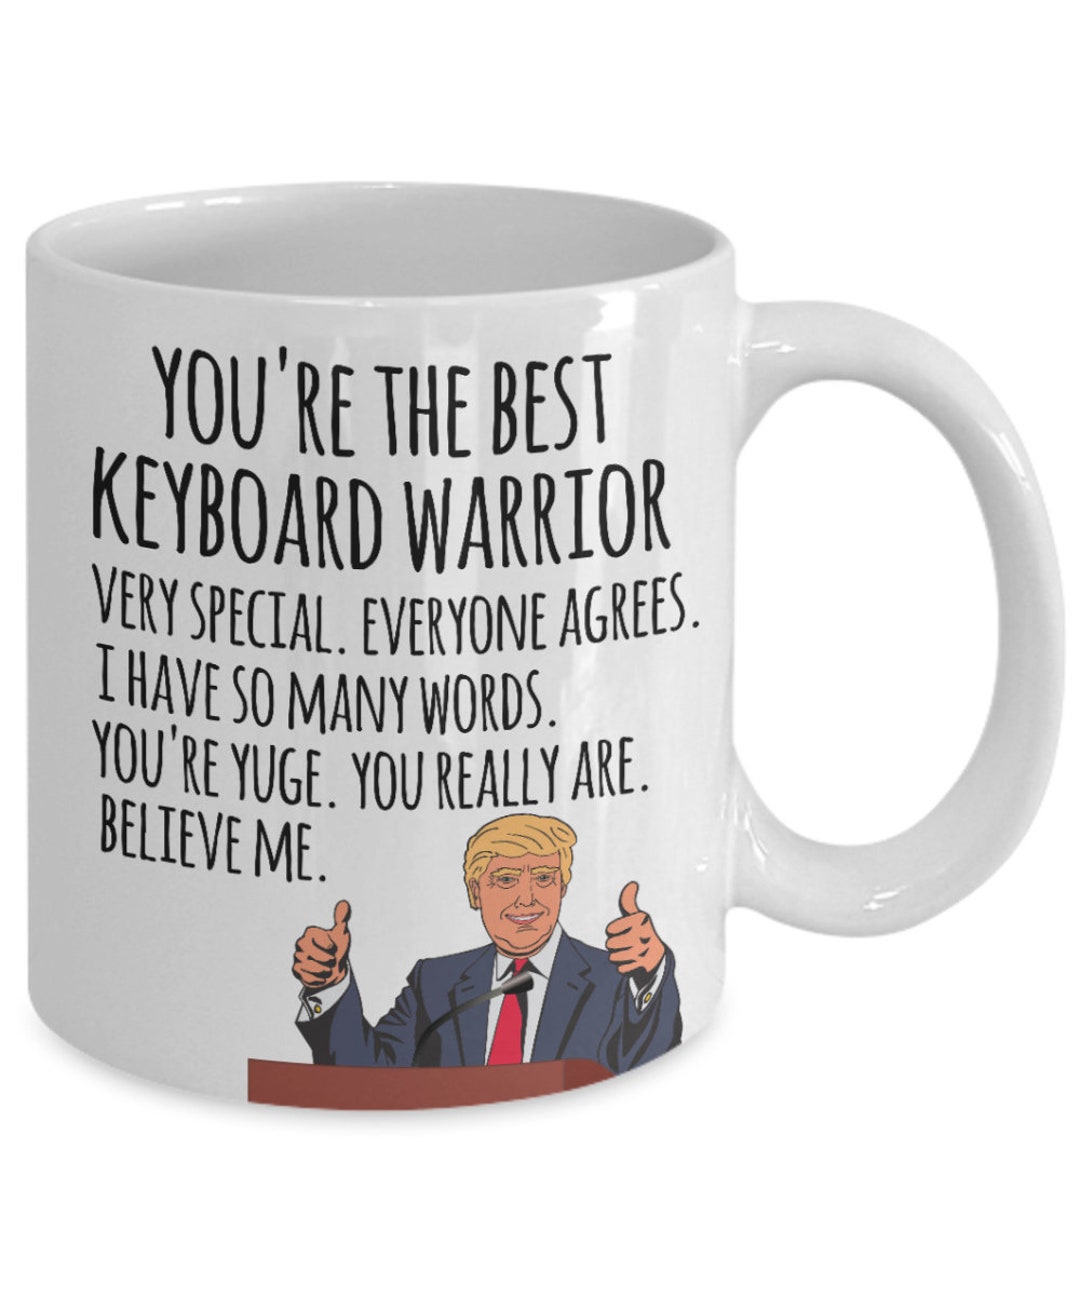 The Warriors Gift Set (Mug and Keyring)